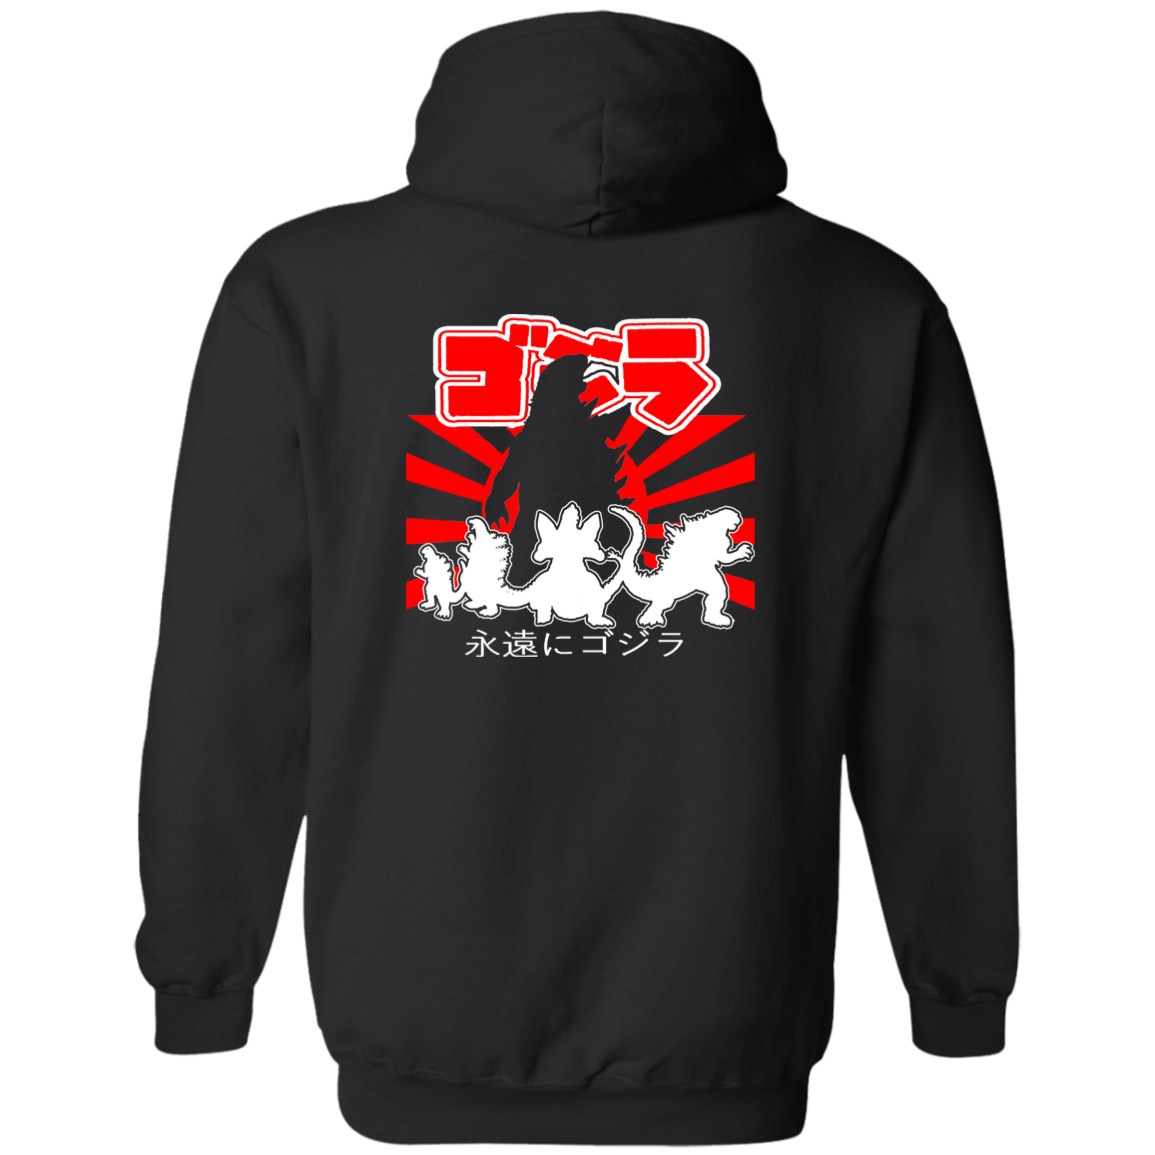 ArtichokeUSA Custom Design. Godzilla. Long Live the King. (1954 to 2019. 65 Years! Fan Art. Zip Up Hooded Sweatshirt